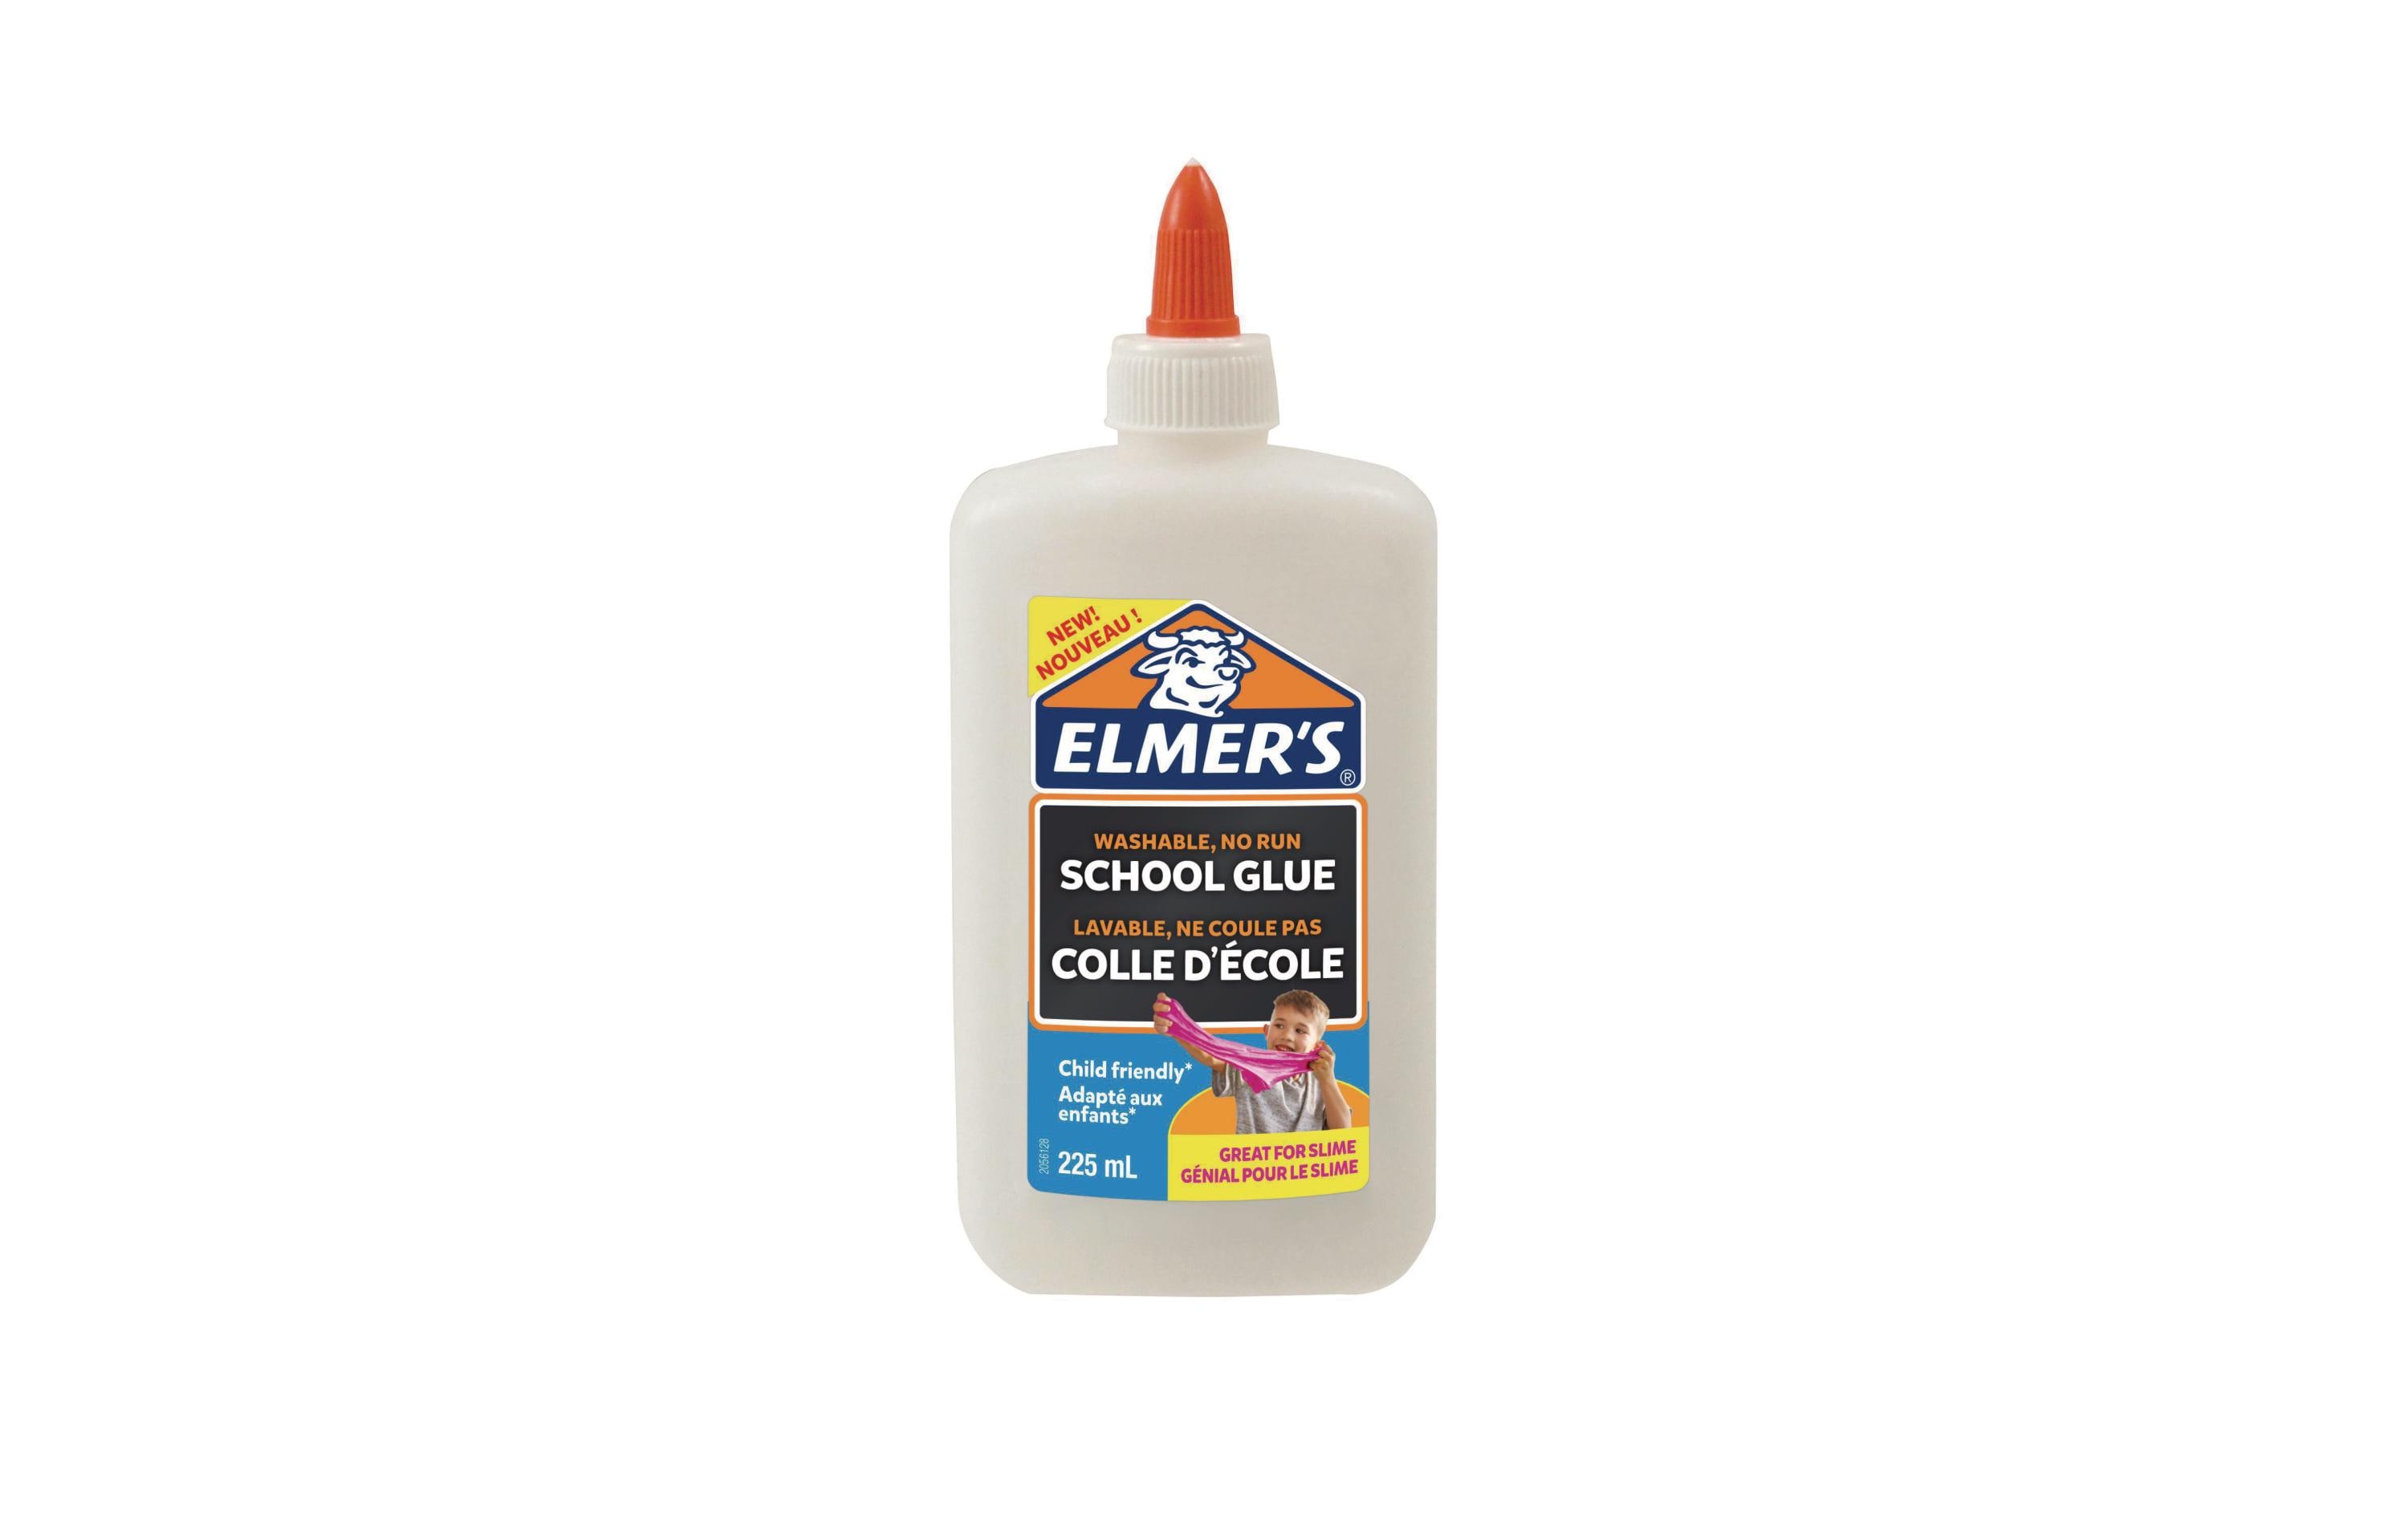 Elmers Colle blanche, 225 ml - acheter chez